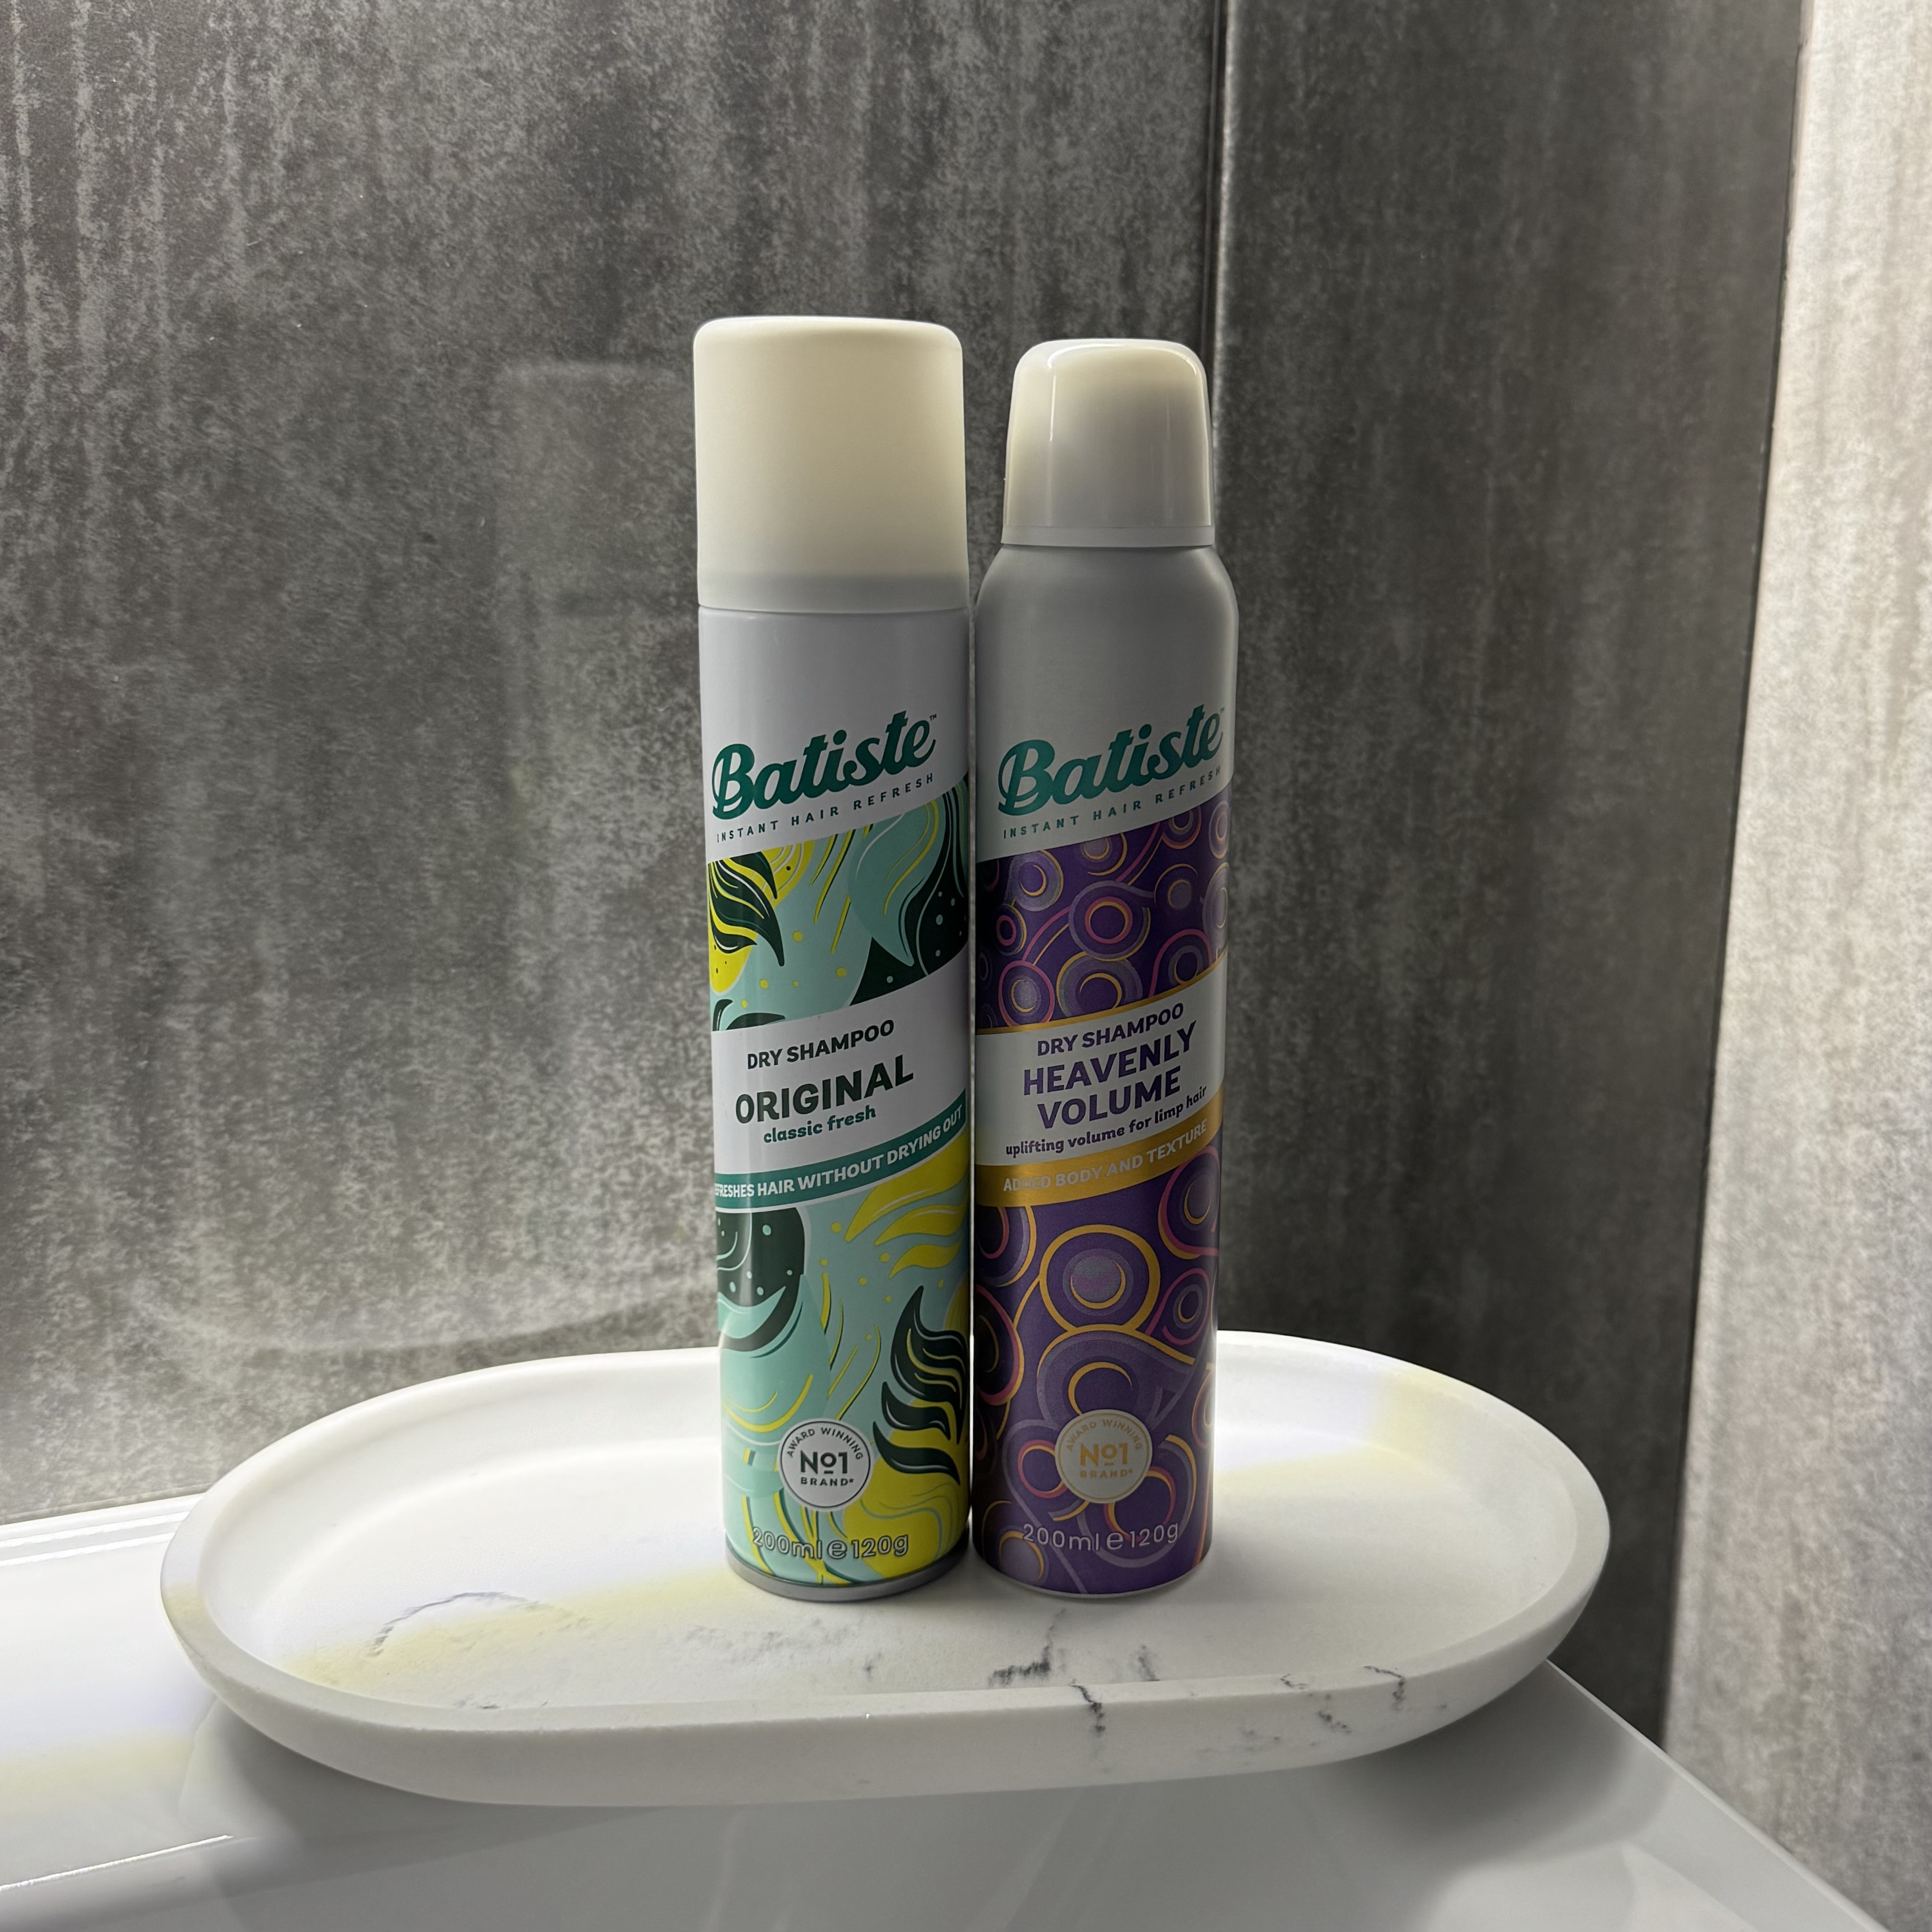 Batiste Dry Shampoo Heavenly Volume